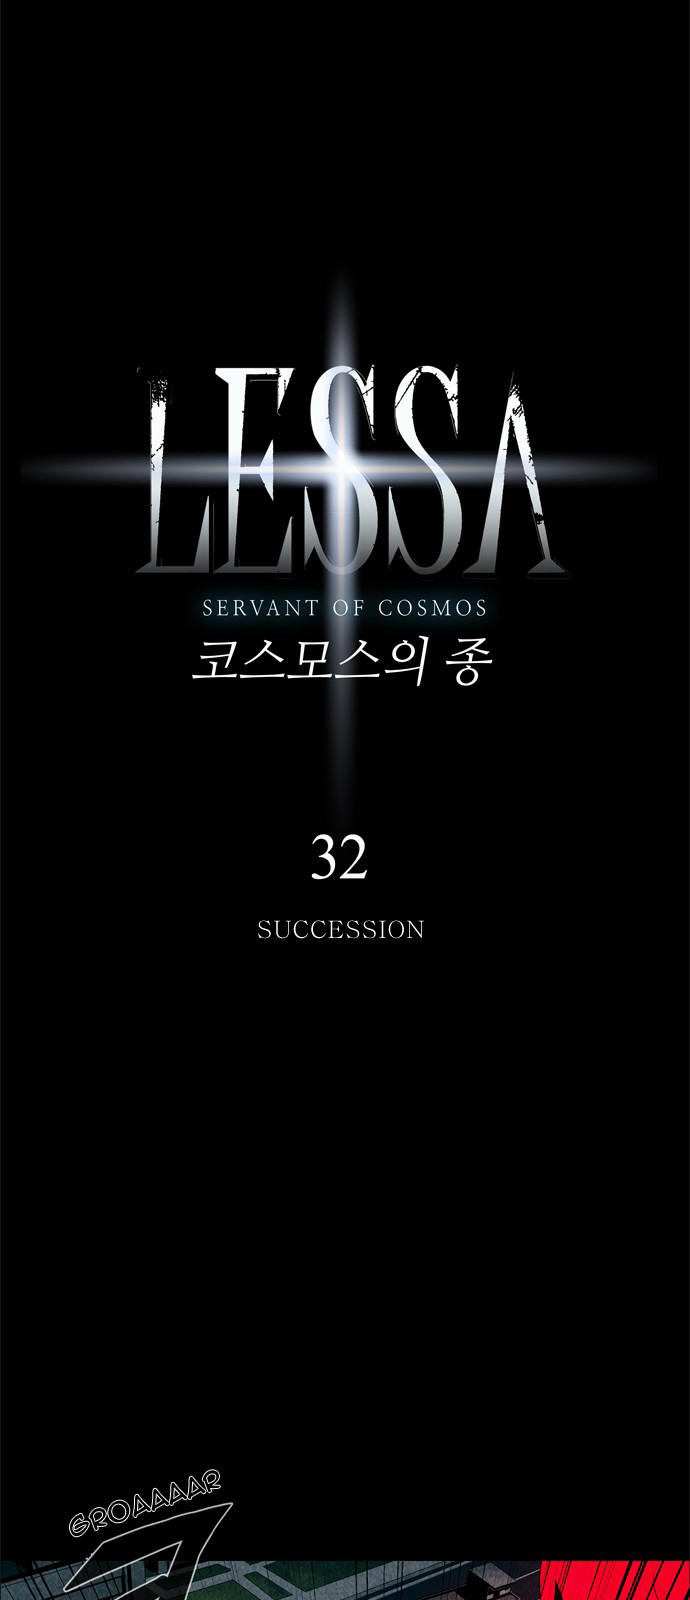 LESSA Servant of Cosmos Ch. 32 Succession